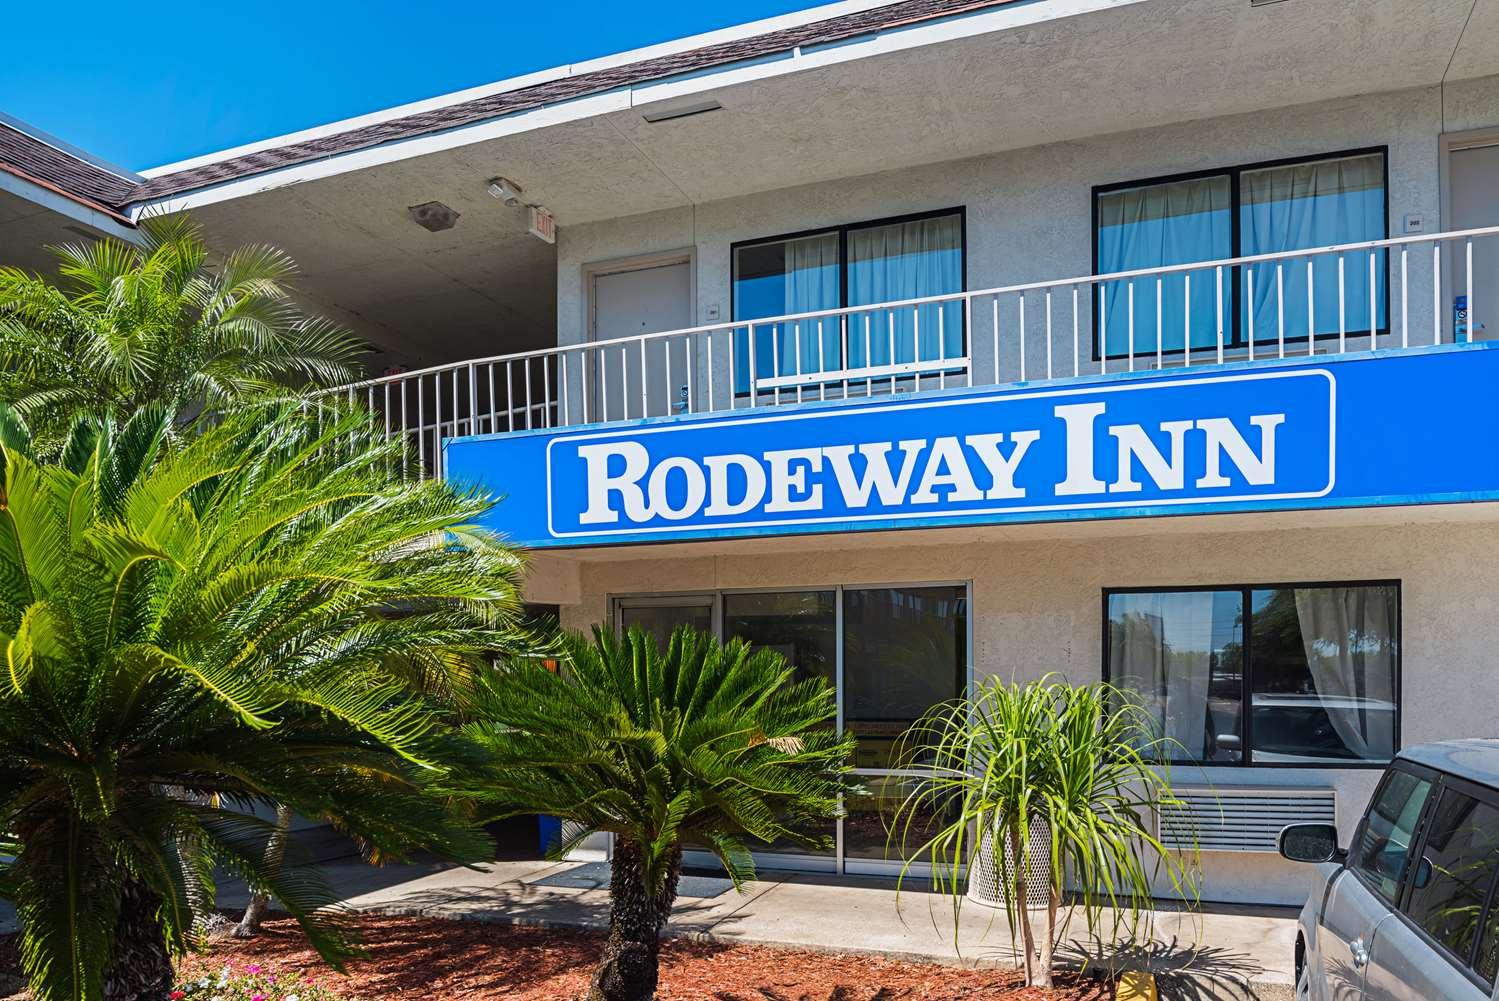 Rodeway Inn Kissimmee Maingate West in Kissimmee, FL